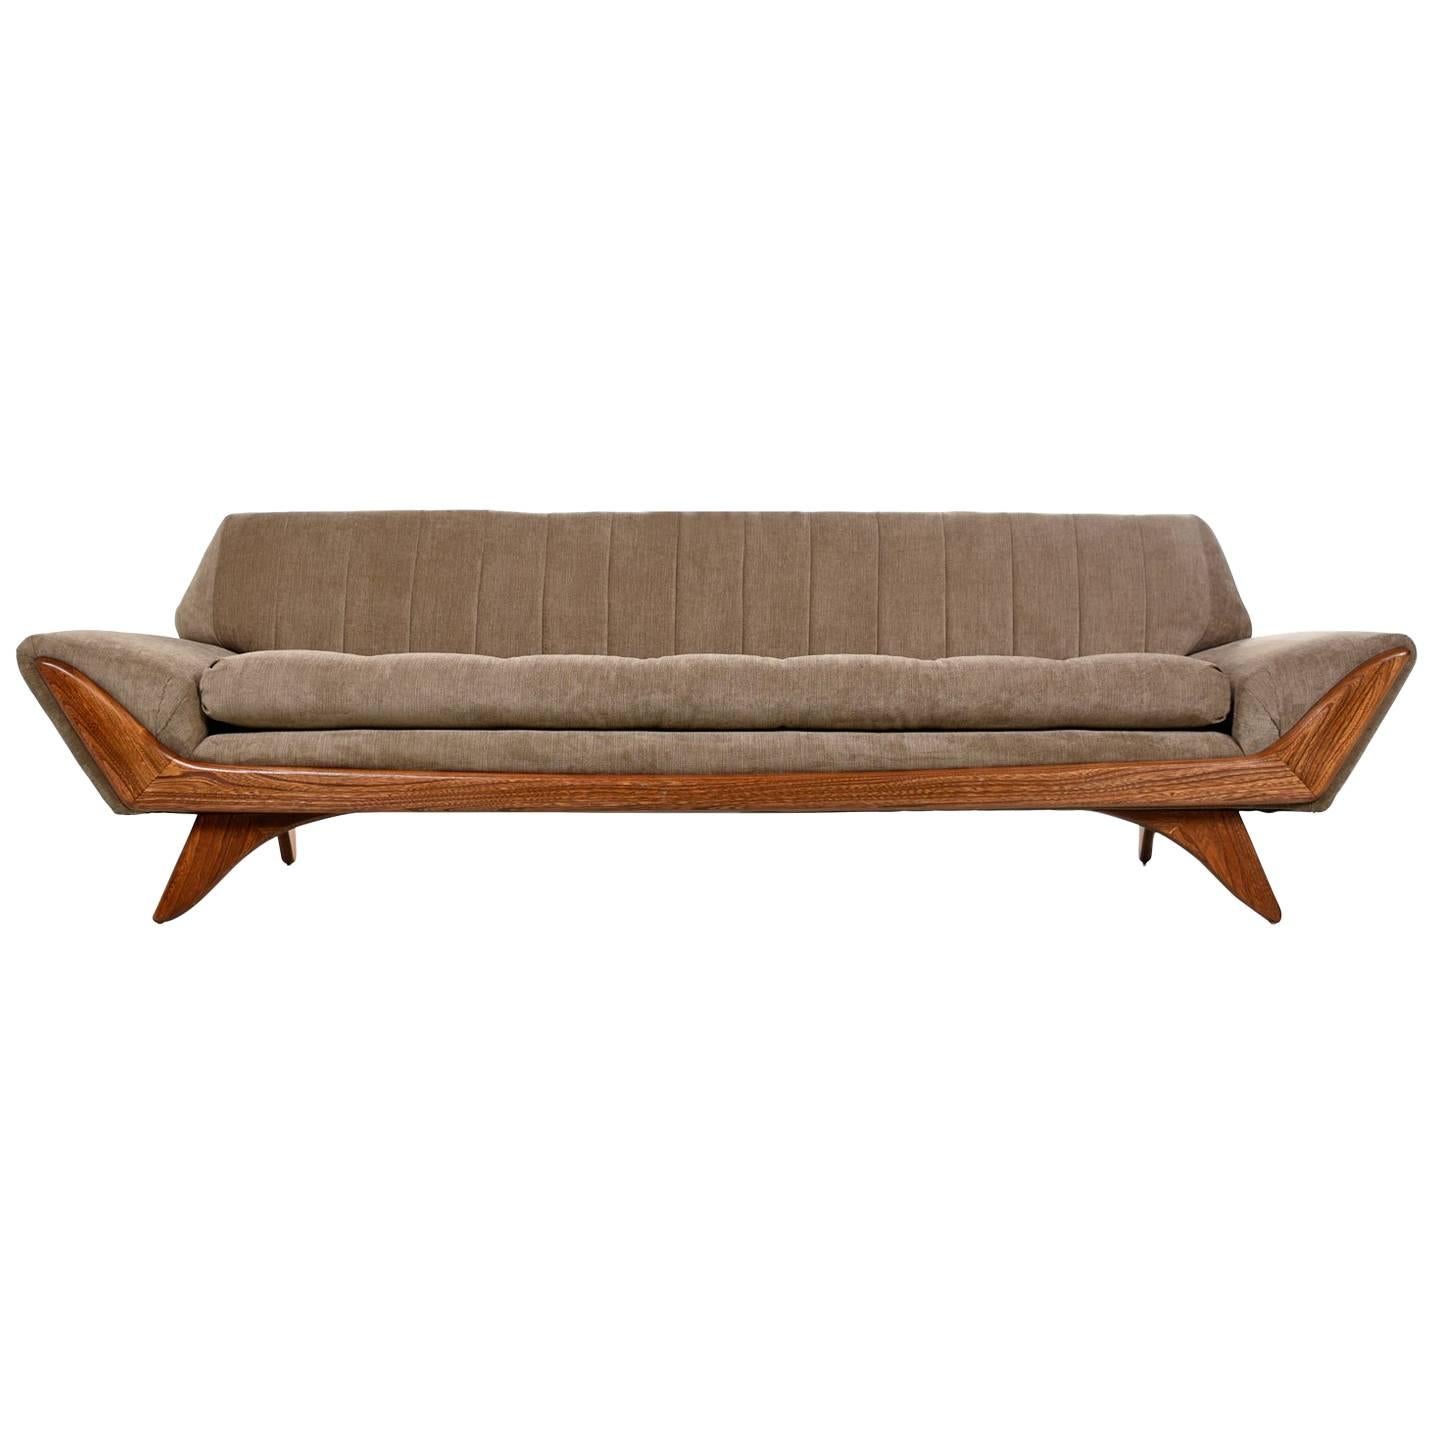 Restored Midcentury Adrian Pearsall Oak Accent Gondola Sofa Couch, circa 1960s